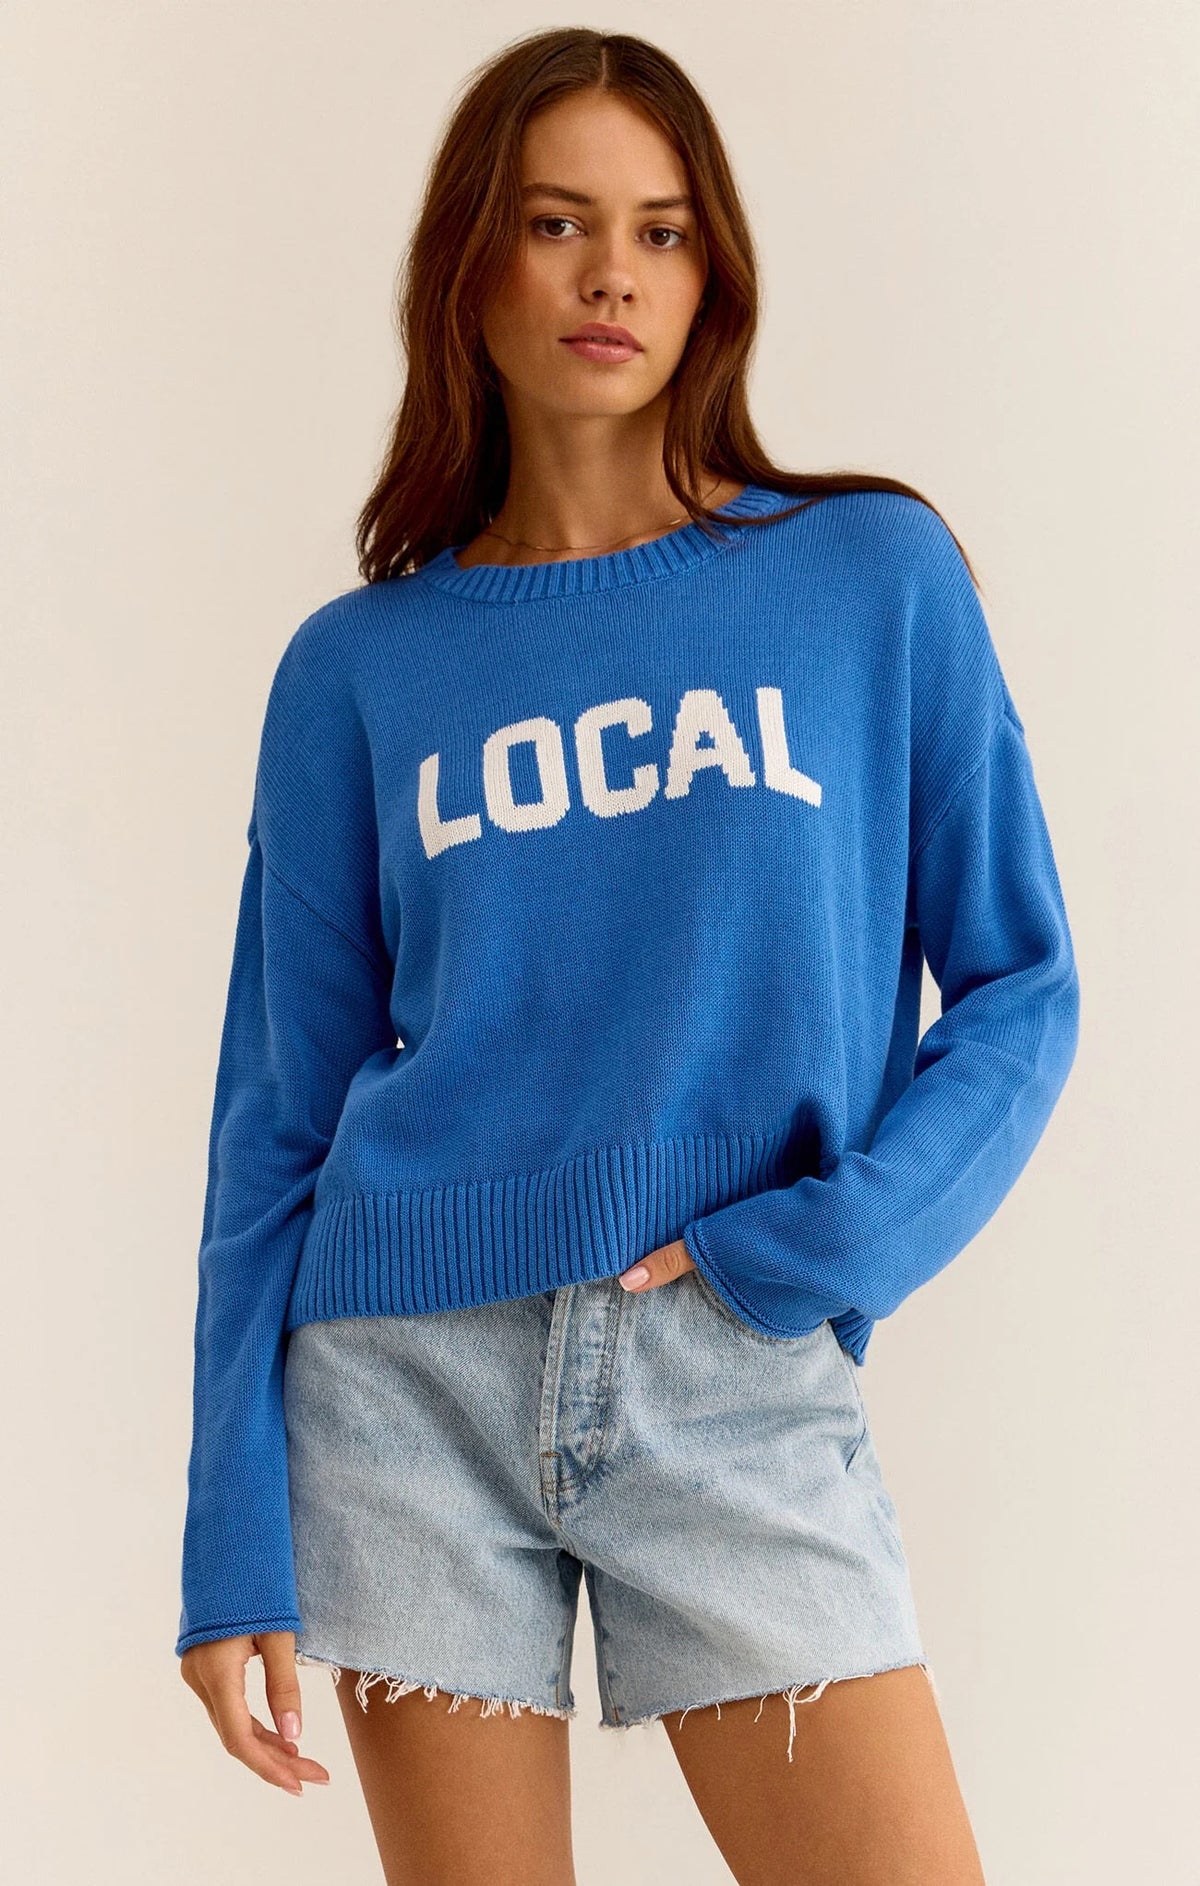 Z Supply Sienna Local Sweater